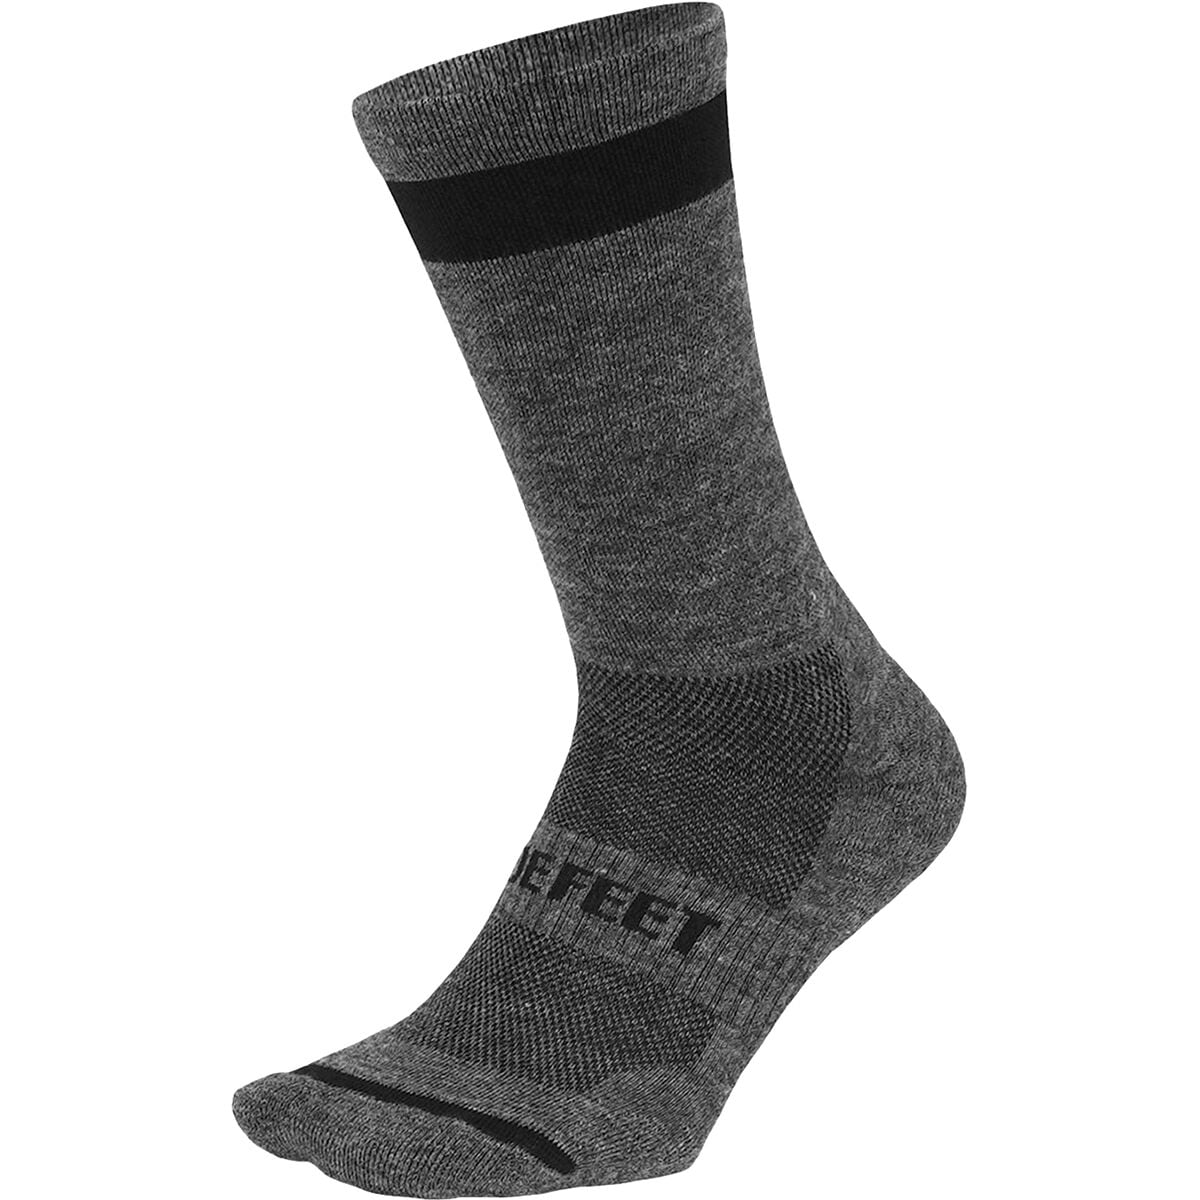 DeFeet Cush Wool Blend 7in Sock Gravel Grey, S - Men's